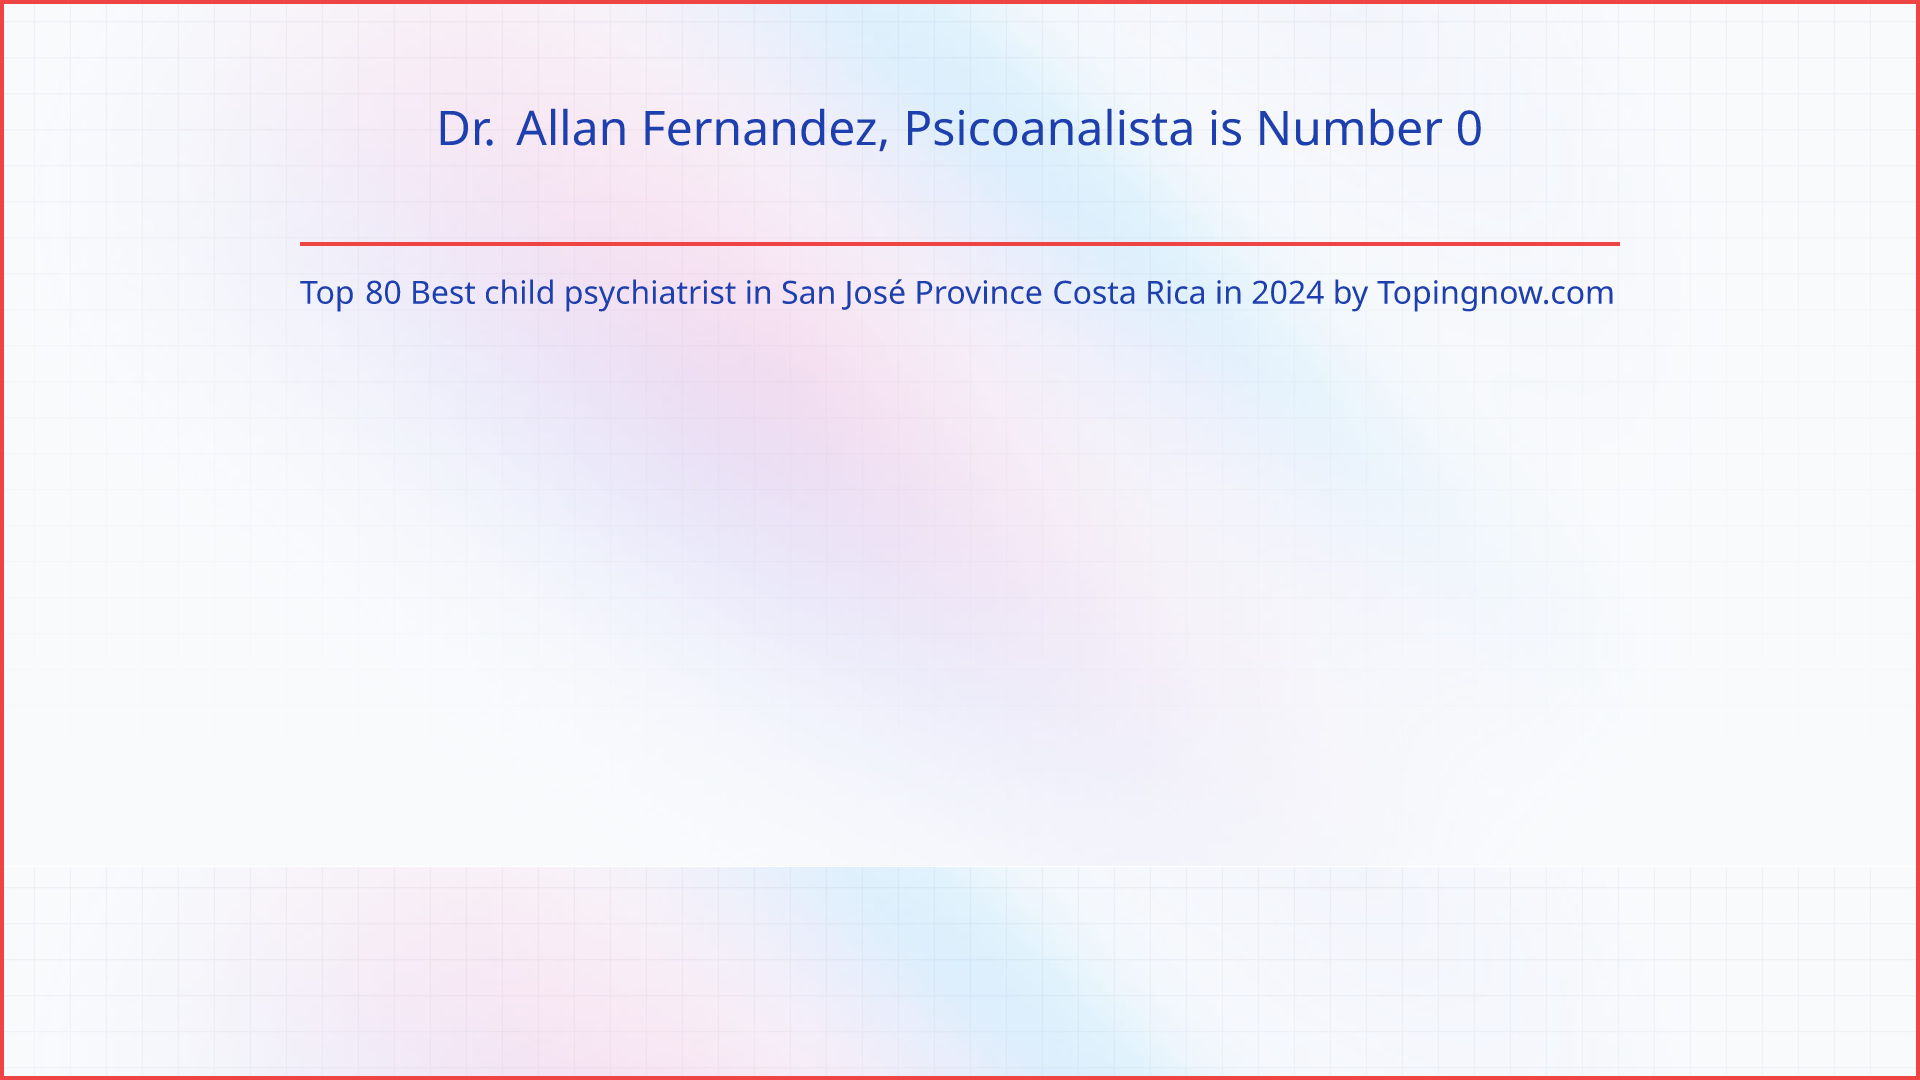 Dr. Allan Fernandez, Psicoanalista: Top 80 Best child psychiatrist in San José Province Costa Rica in 2024